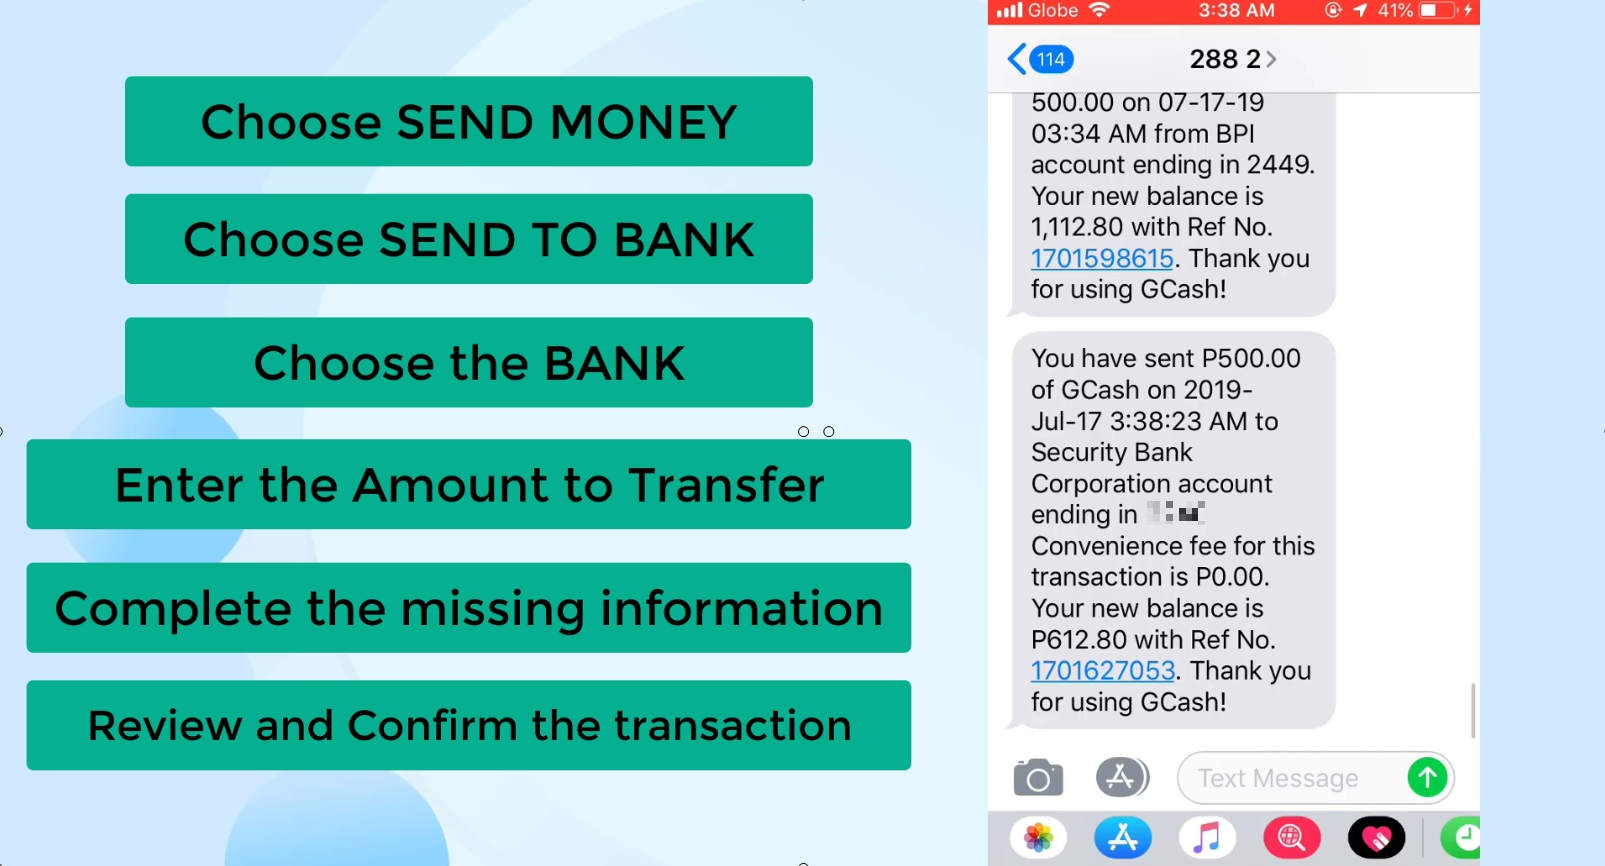 BPI send money security bank using gcash 29